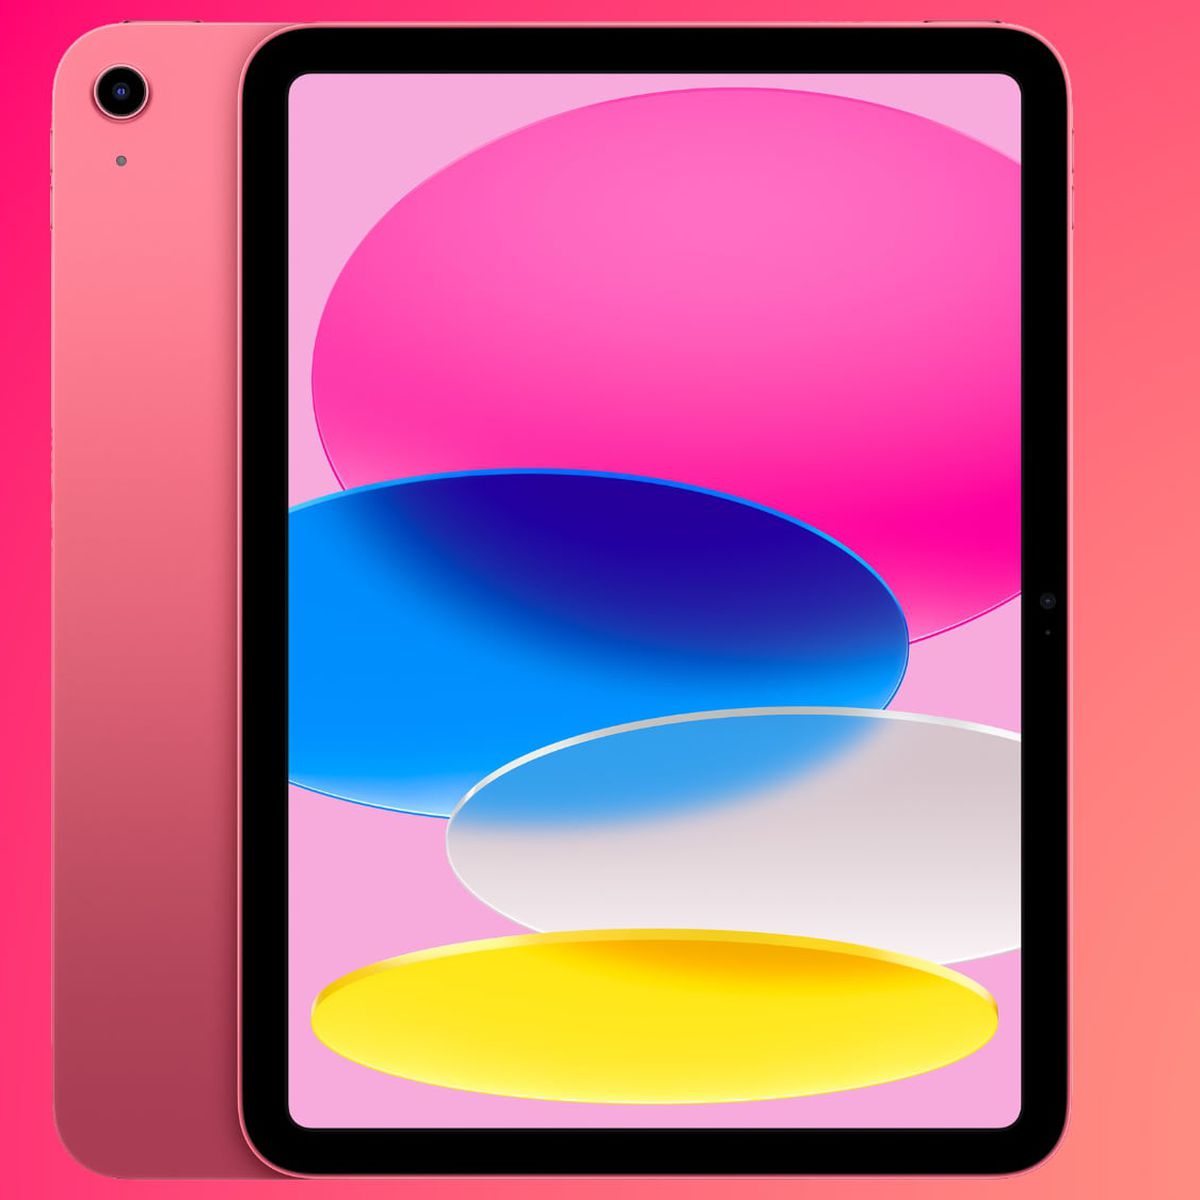 iPad 9th Generation Vs iPad 7th Generation! (Comparison) (Review) 